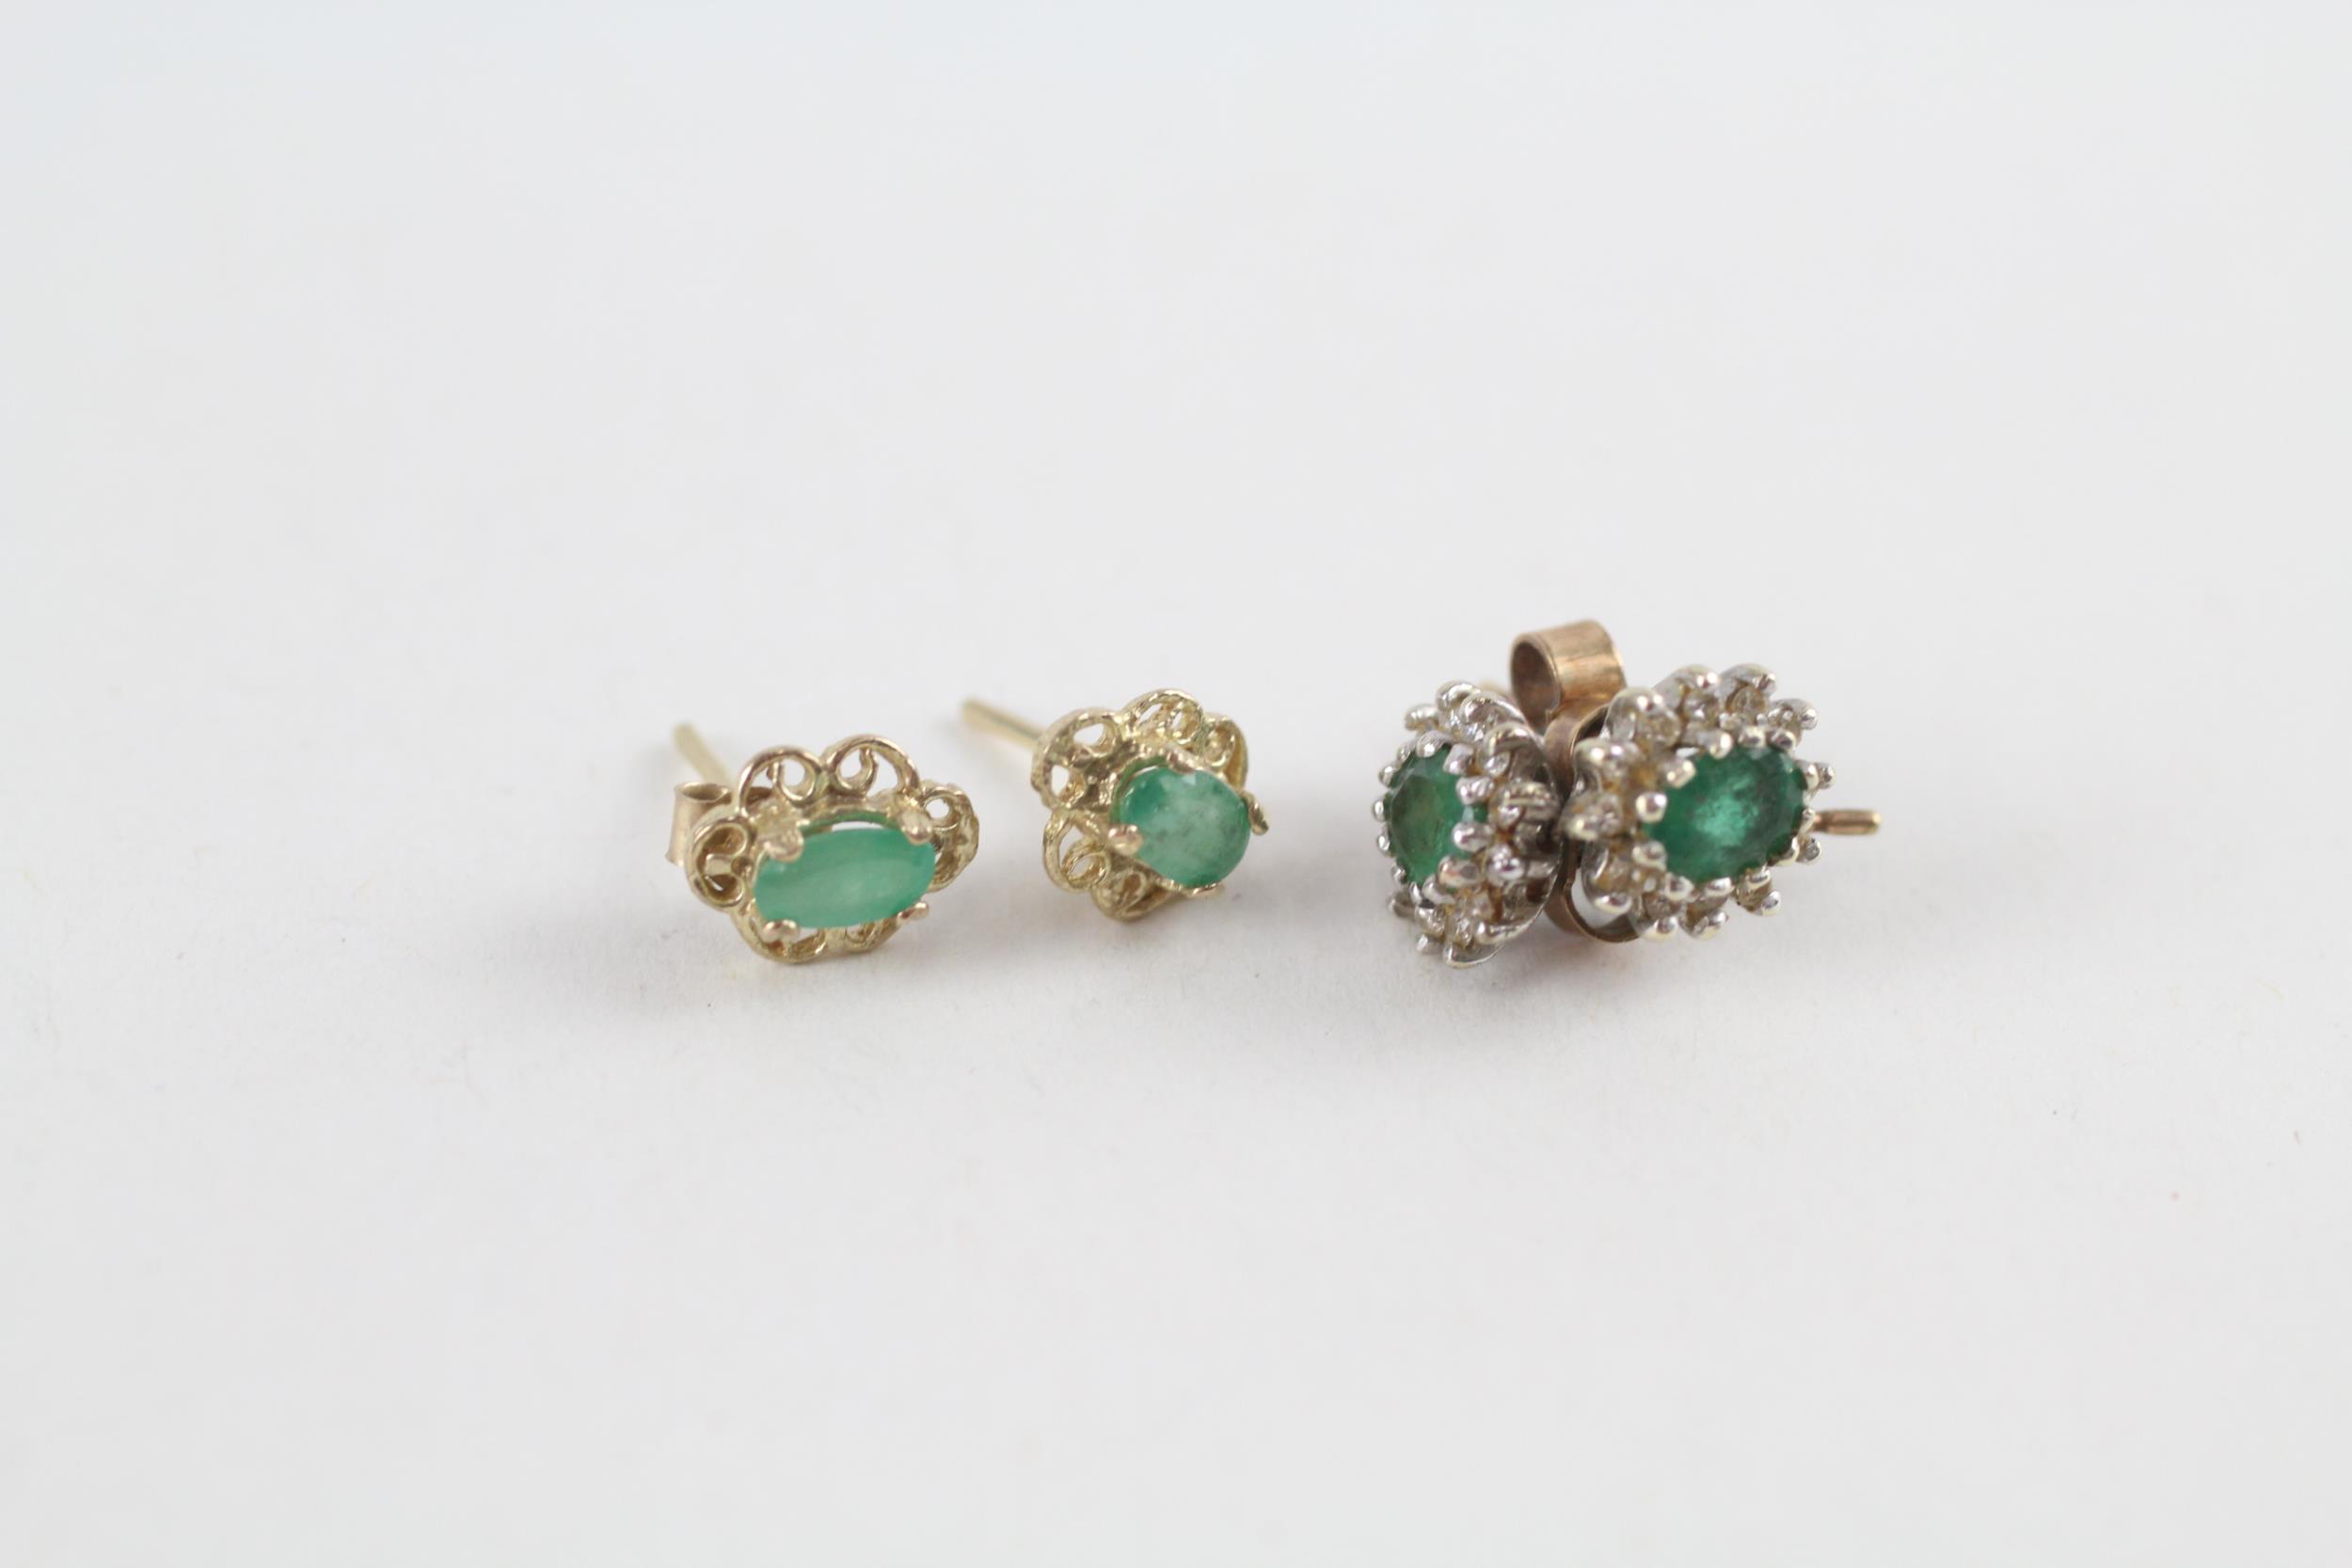 2x 9ct gold emerald & diamond earrings (2.3g)